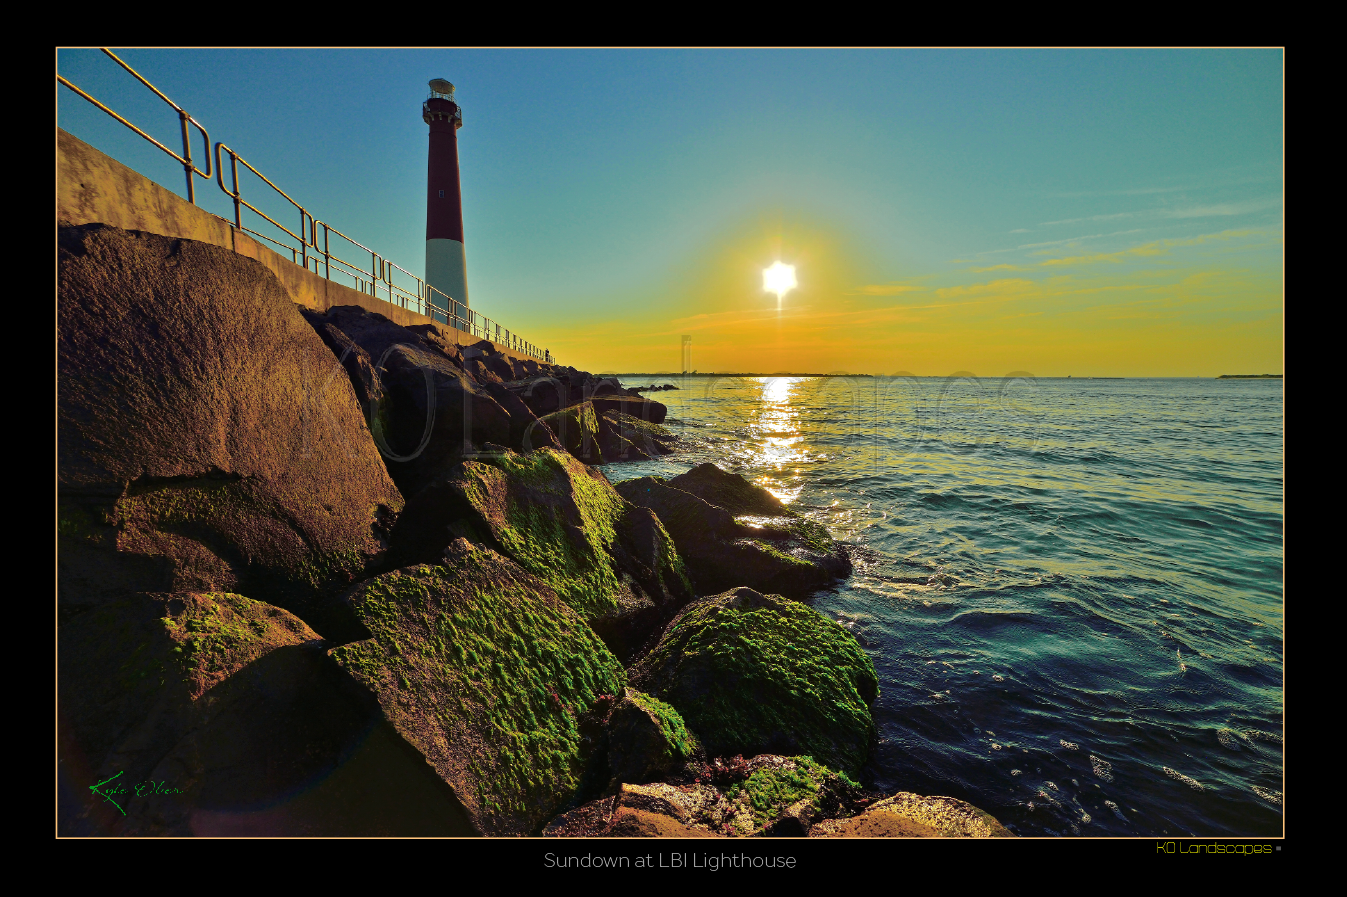 Shoreline / Sundown at LBI Lighthouse